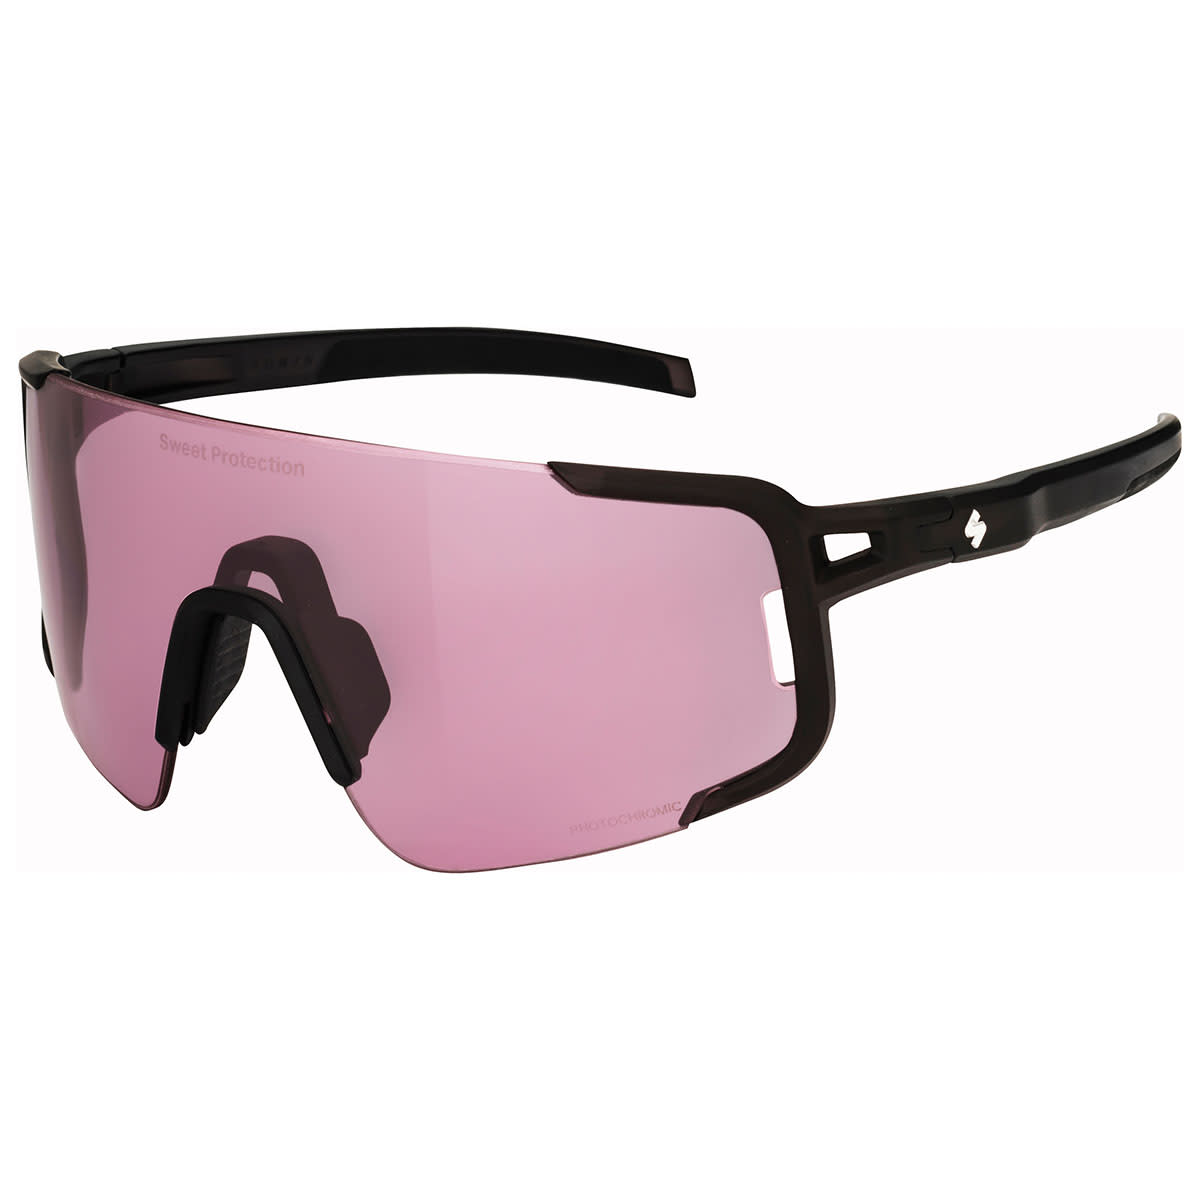 Sweet Protection Ronin RIG Photochromic Sunglasses